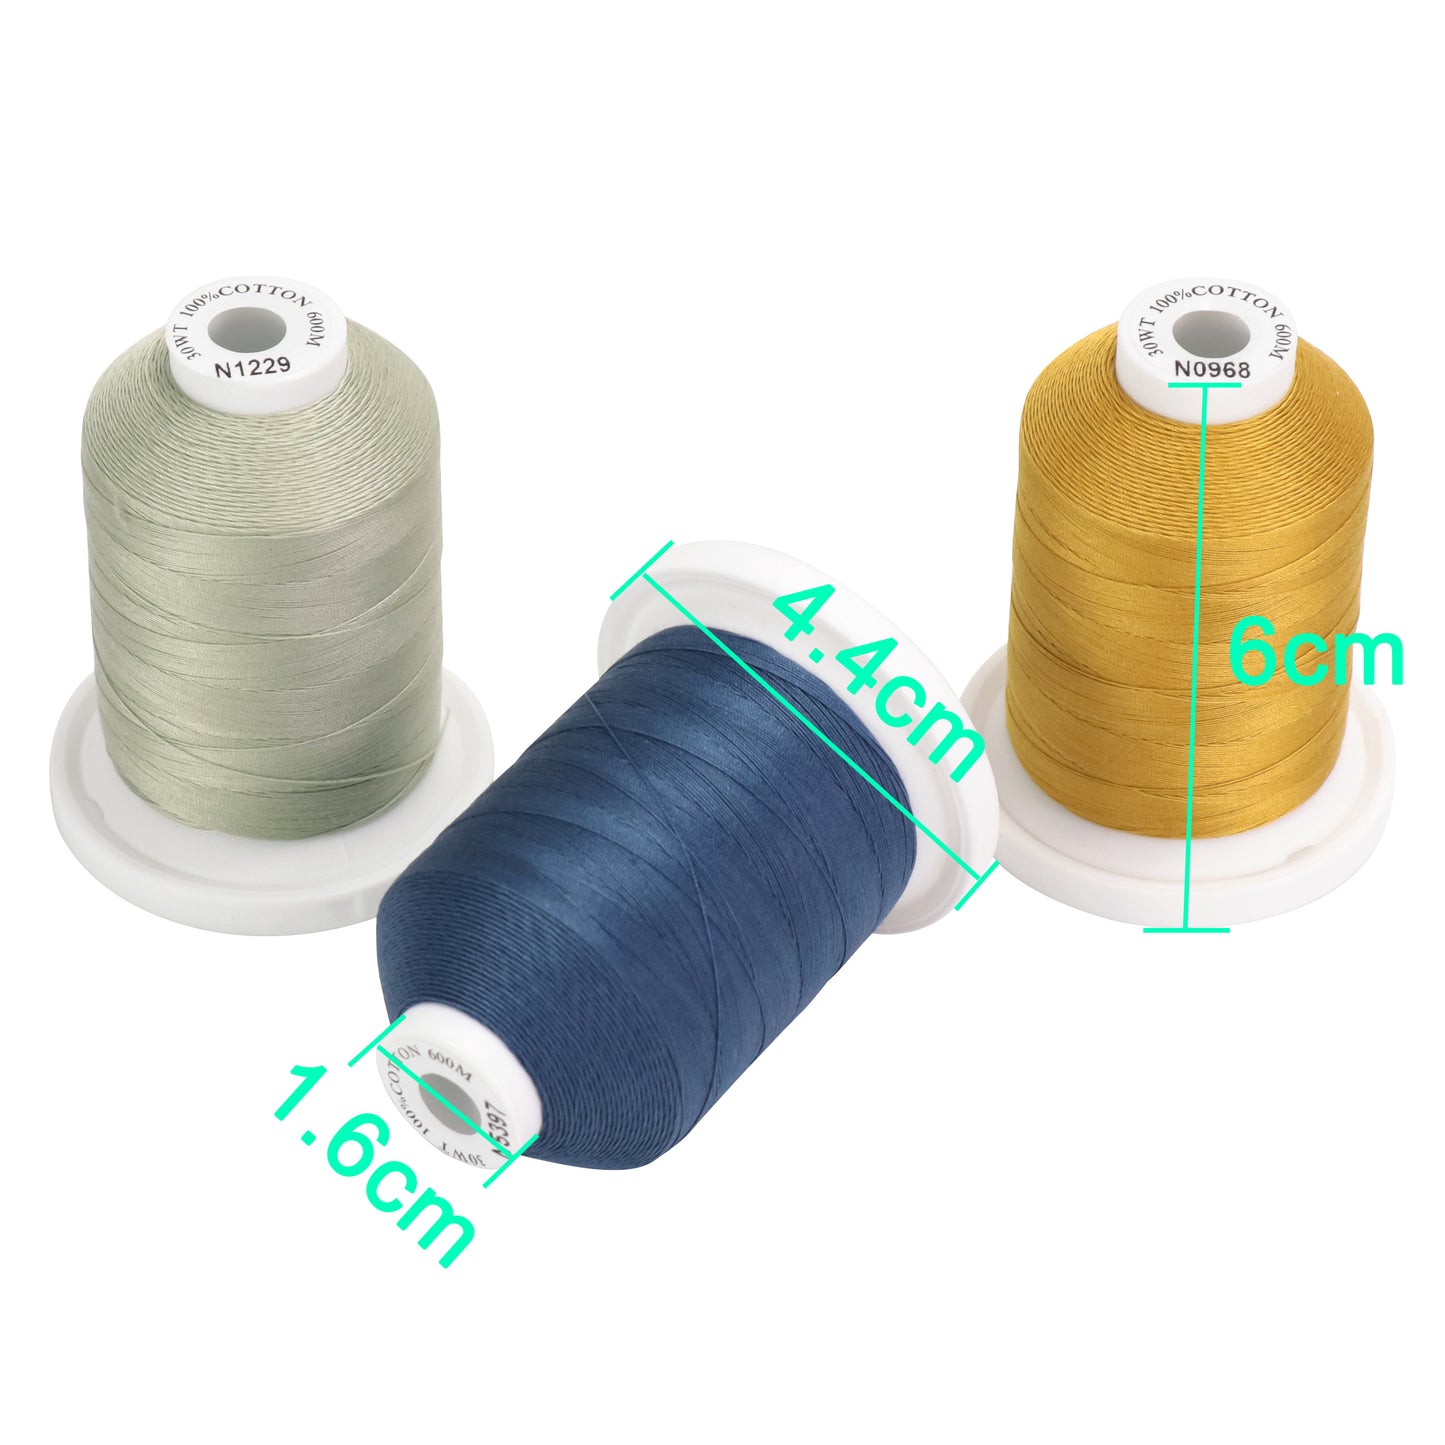 New brothread 12 Neutral&Jean Colors Multi-Purpose 100% Mercerized Cotton Threads 30WT(50S/3) 600M(660Y) Each Spool